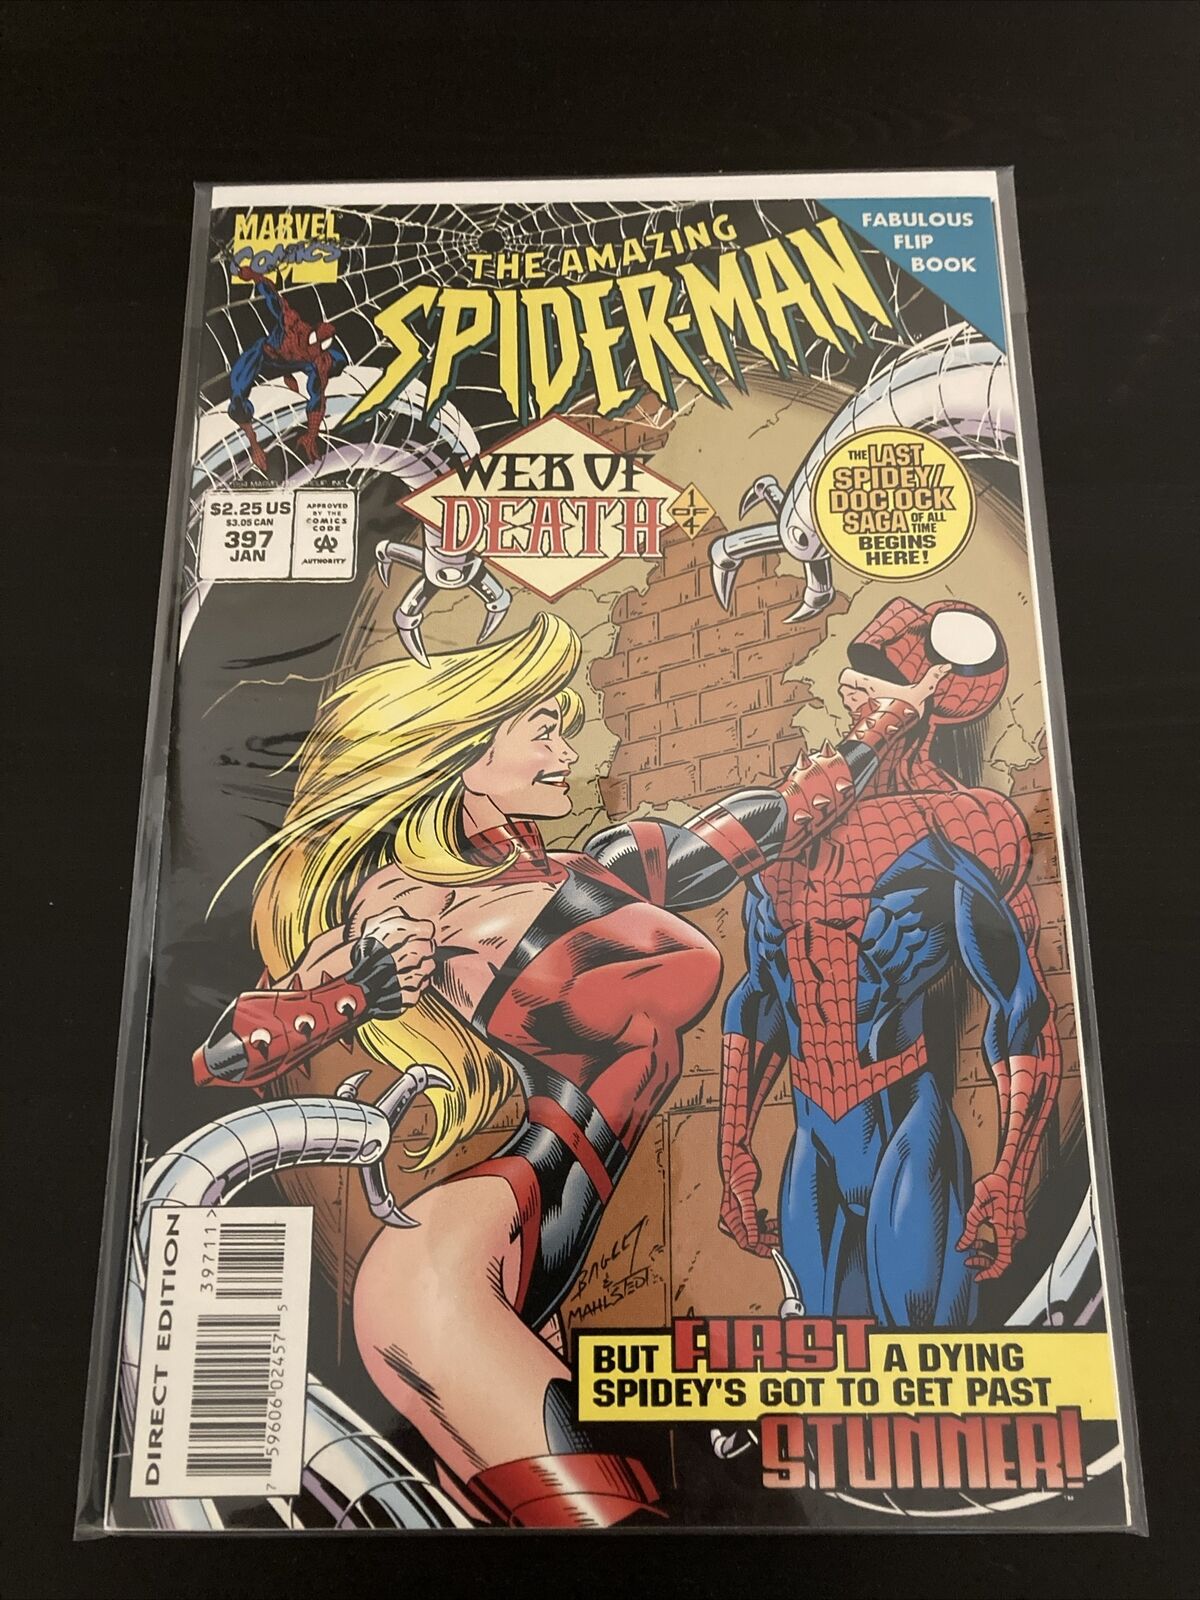 The Amazing Spider-Man #397 (Marvel Comics January 1995)